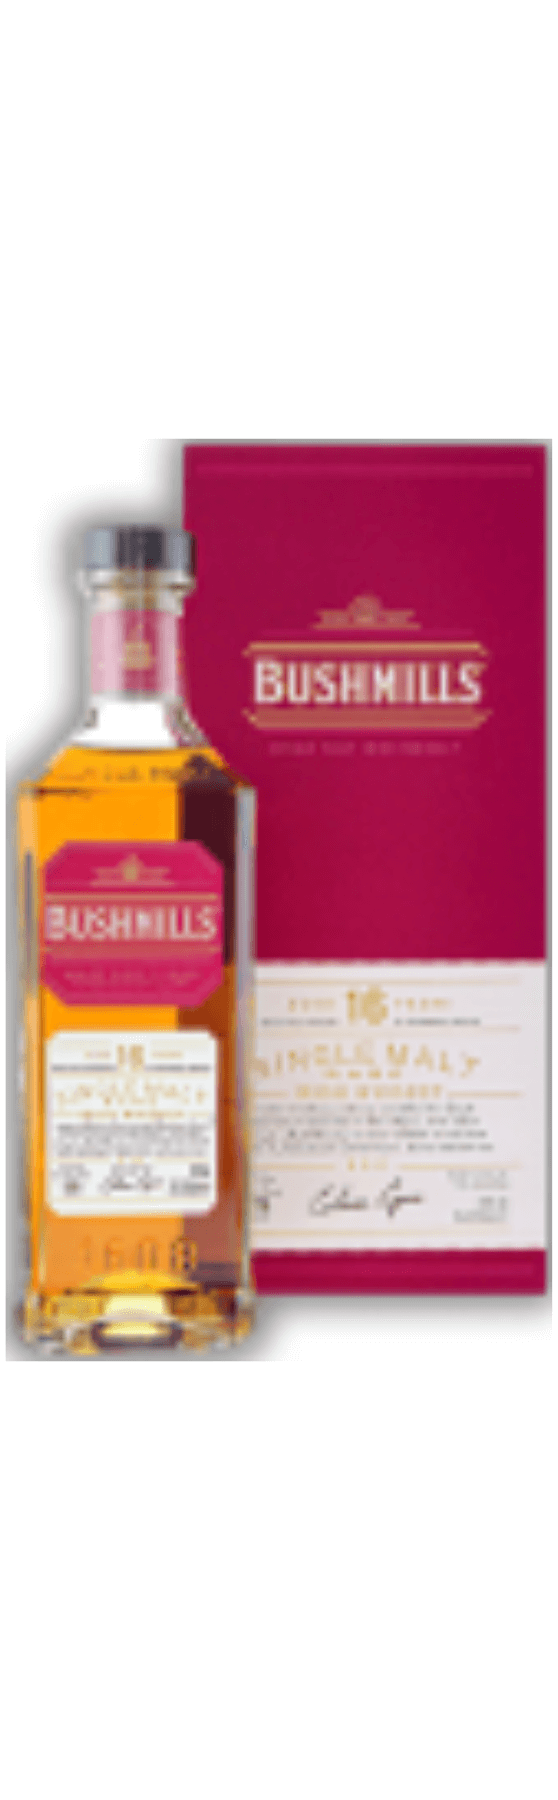 Jahre Single vol. 10 Whiskey Malt Vinoscout 40% Irish Bushmills |